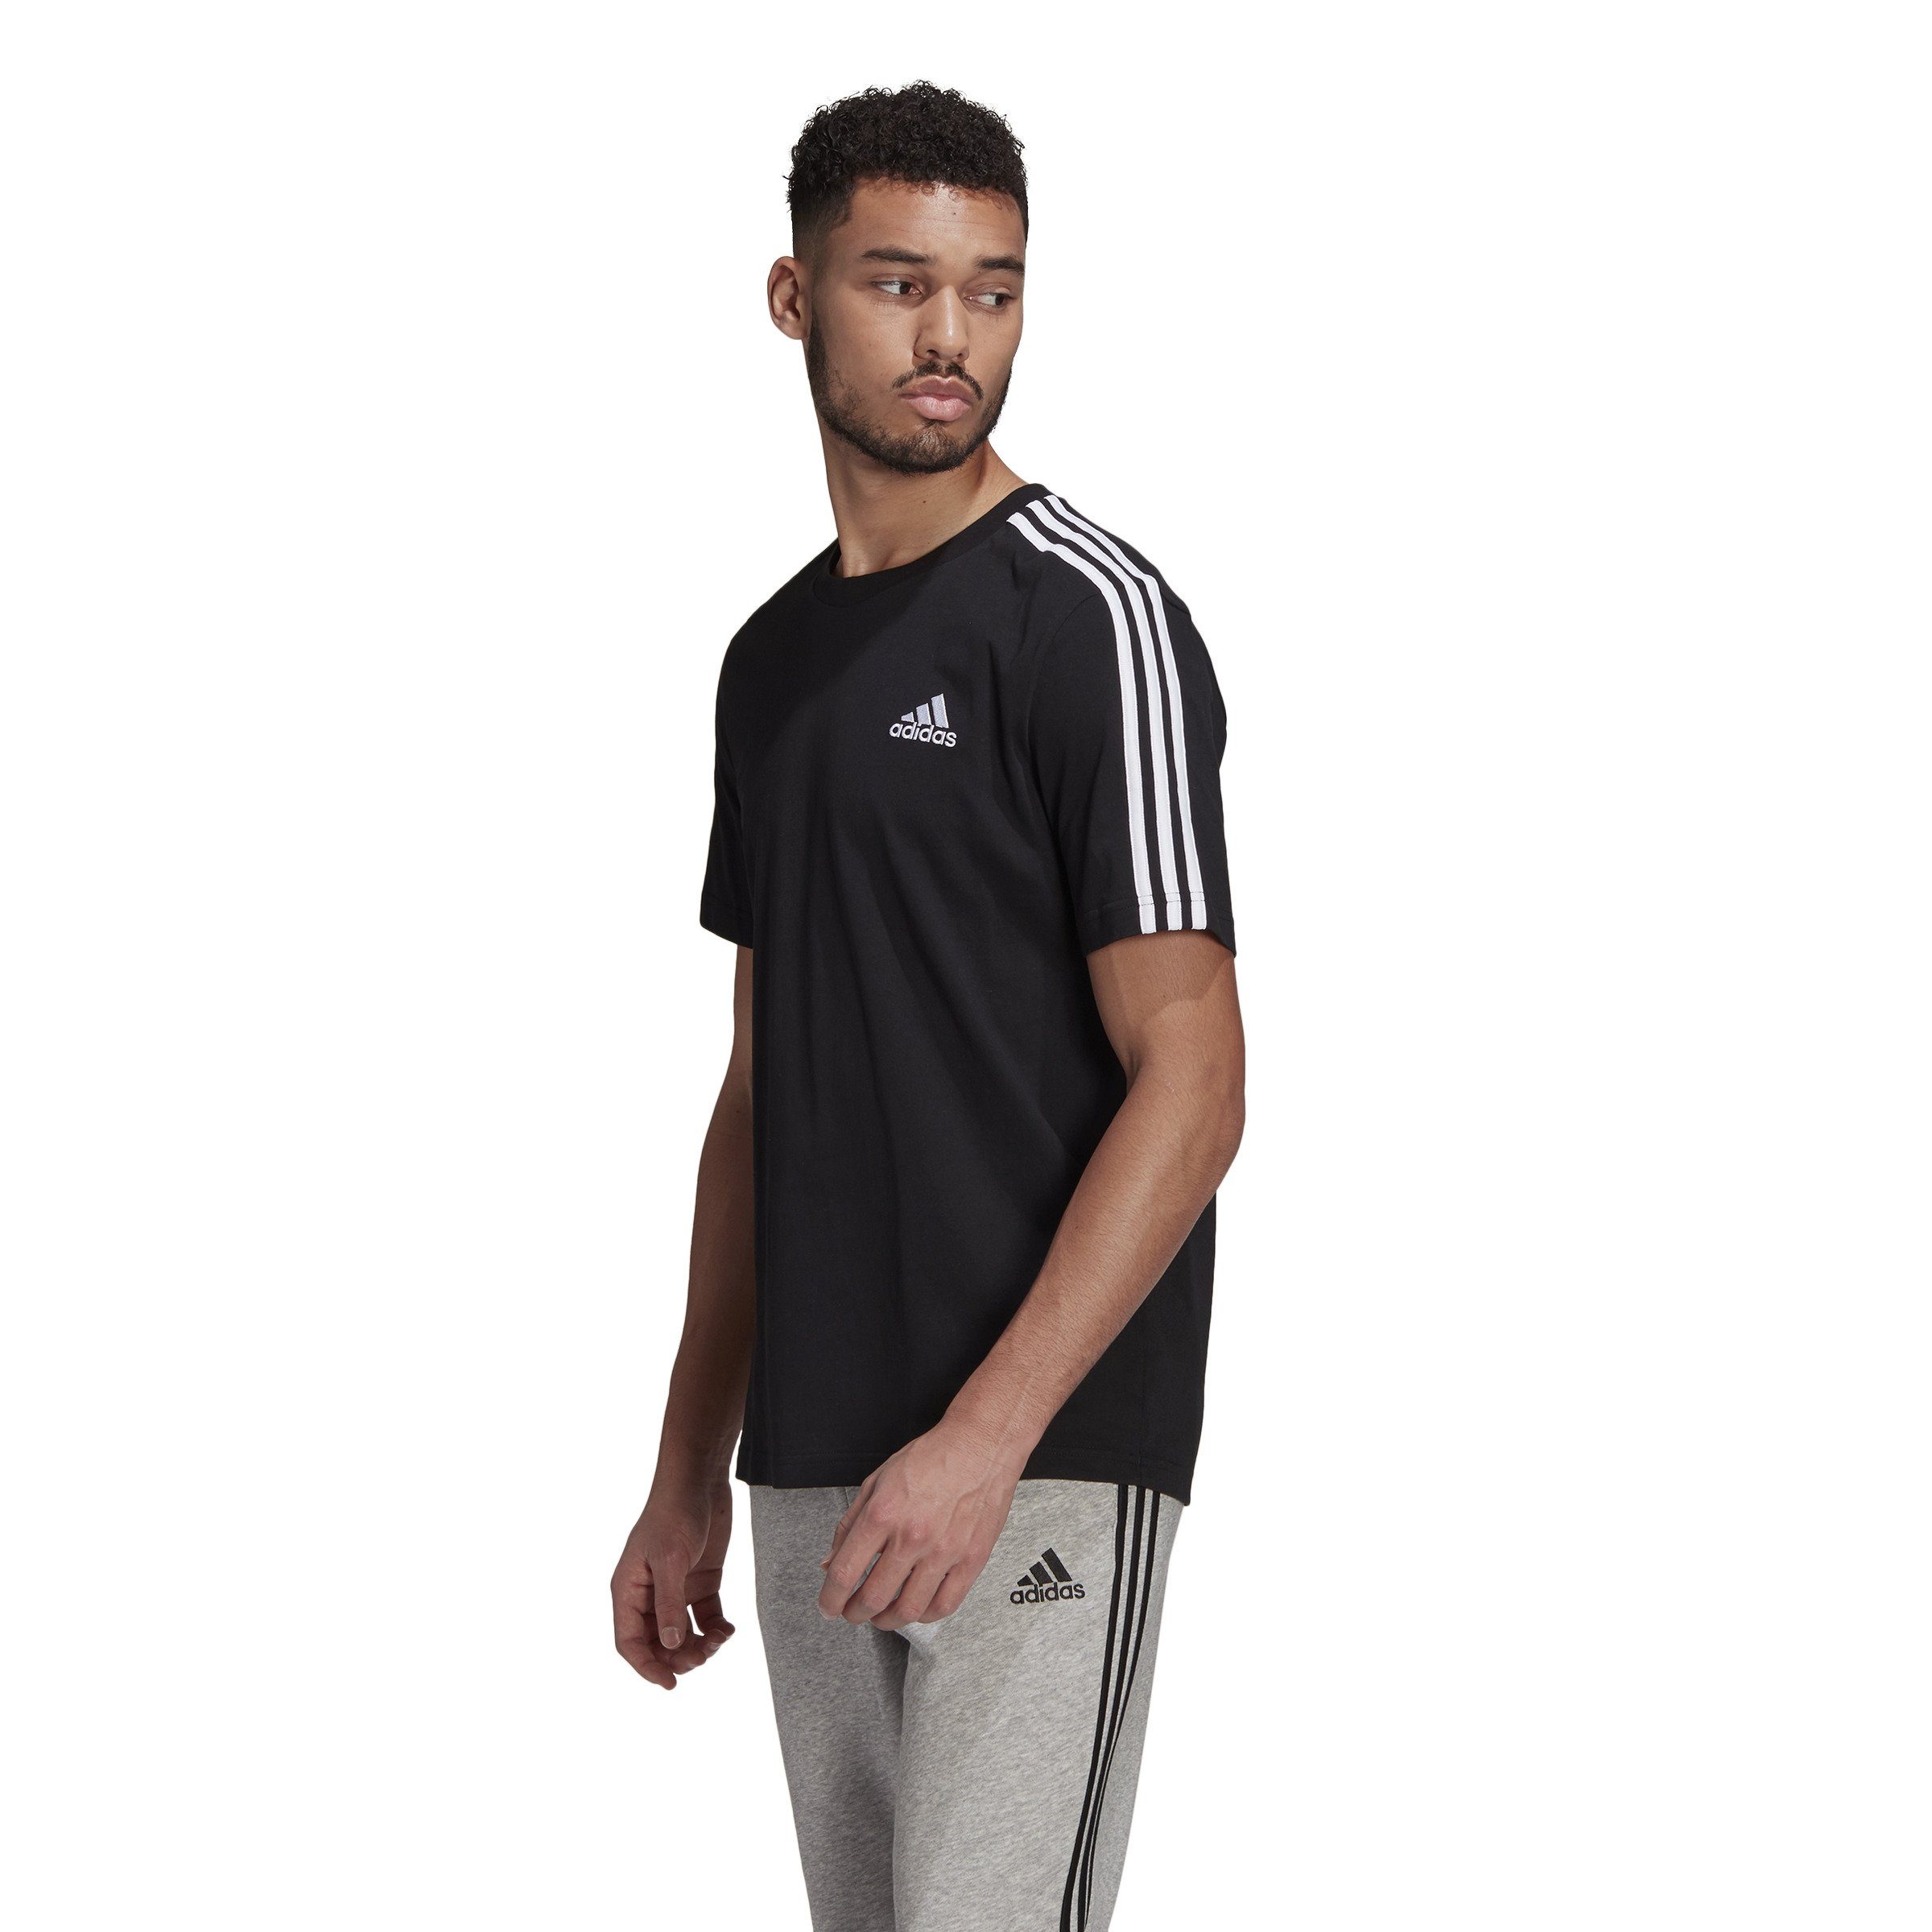 M SJ Kurzarmshirt 3S Sportswear adidas weiss-schwarz-pink T,BLACK/WHITE